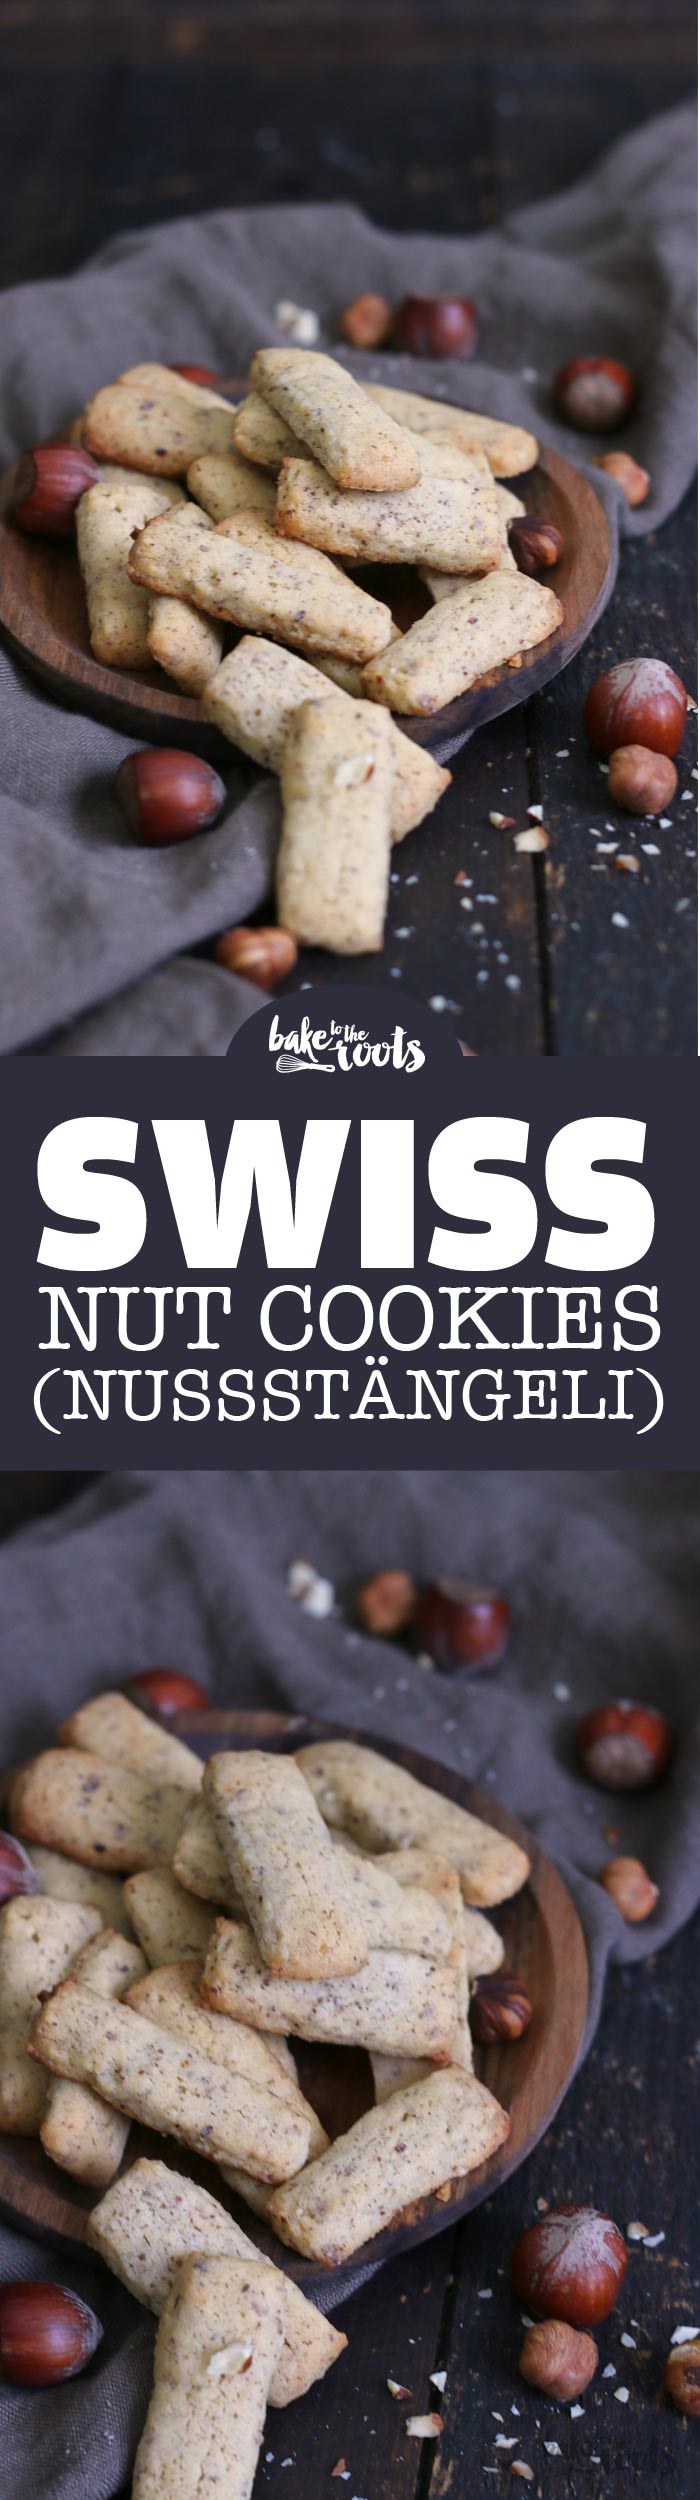 Swiss hazelnut cookies called Nussstängeli | Bake to the roots